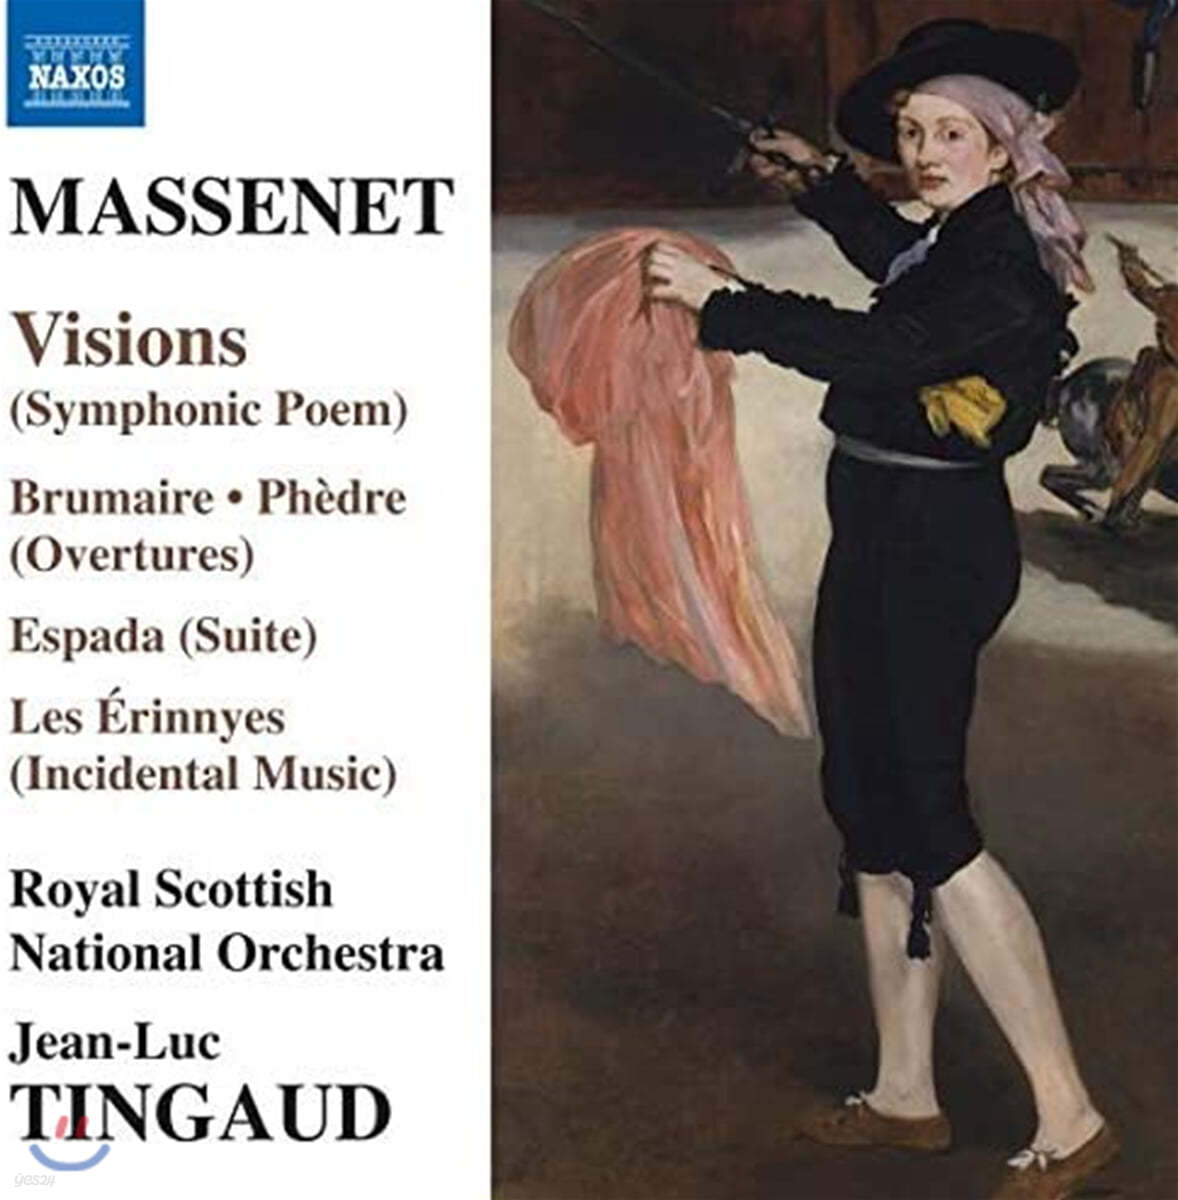 Jean-Luc Tingaud 마스네: 브뤼메르, 영상, 에스파다, 요정, 페드르 (Jules Massenet: Orchestral Music) 